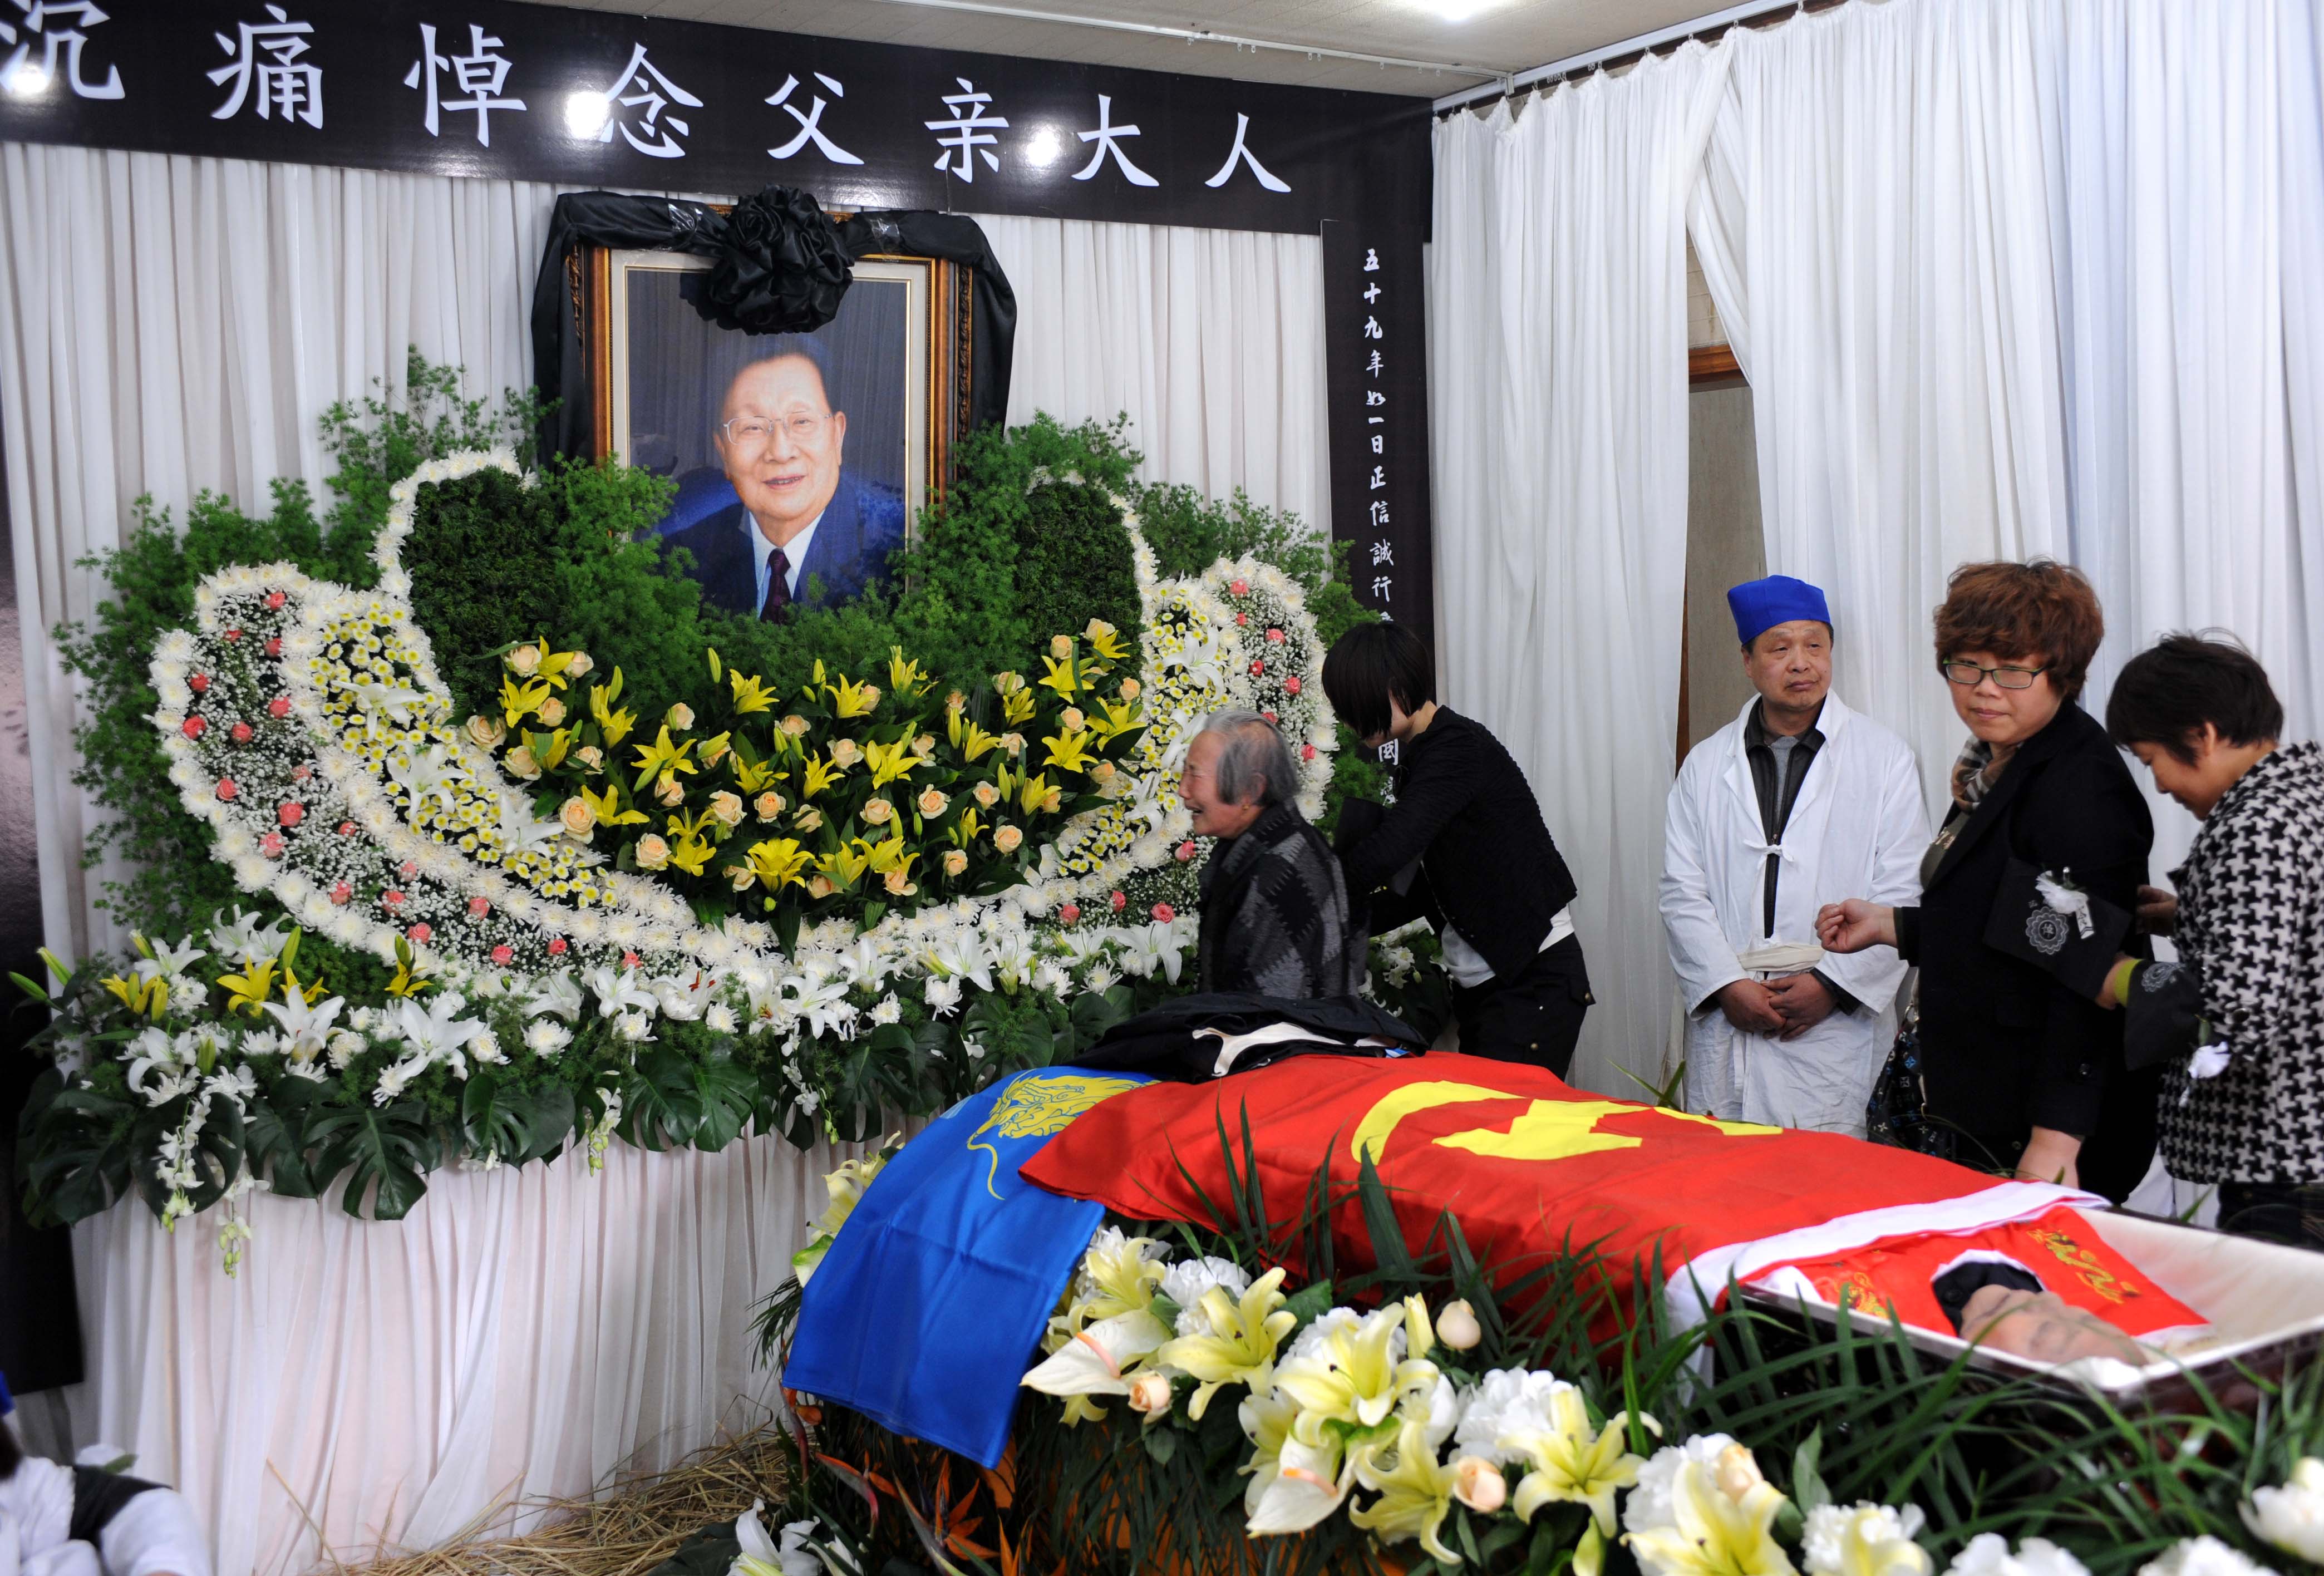 Villagers and representatives of all circles express condolence to the death of Wu Renbao. Photo: Xinhua